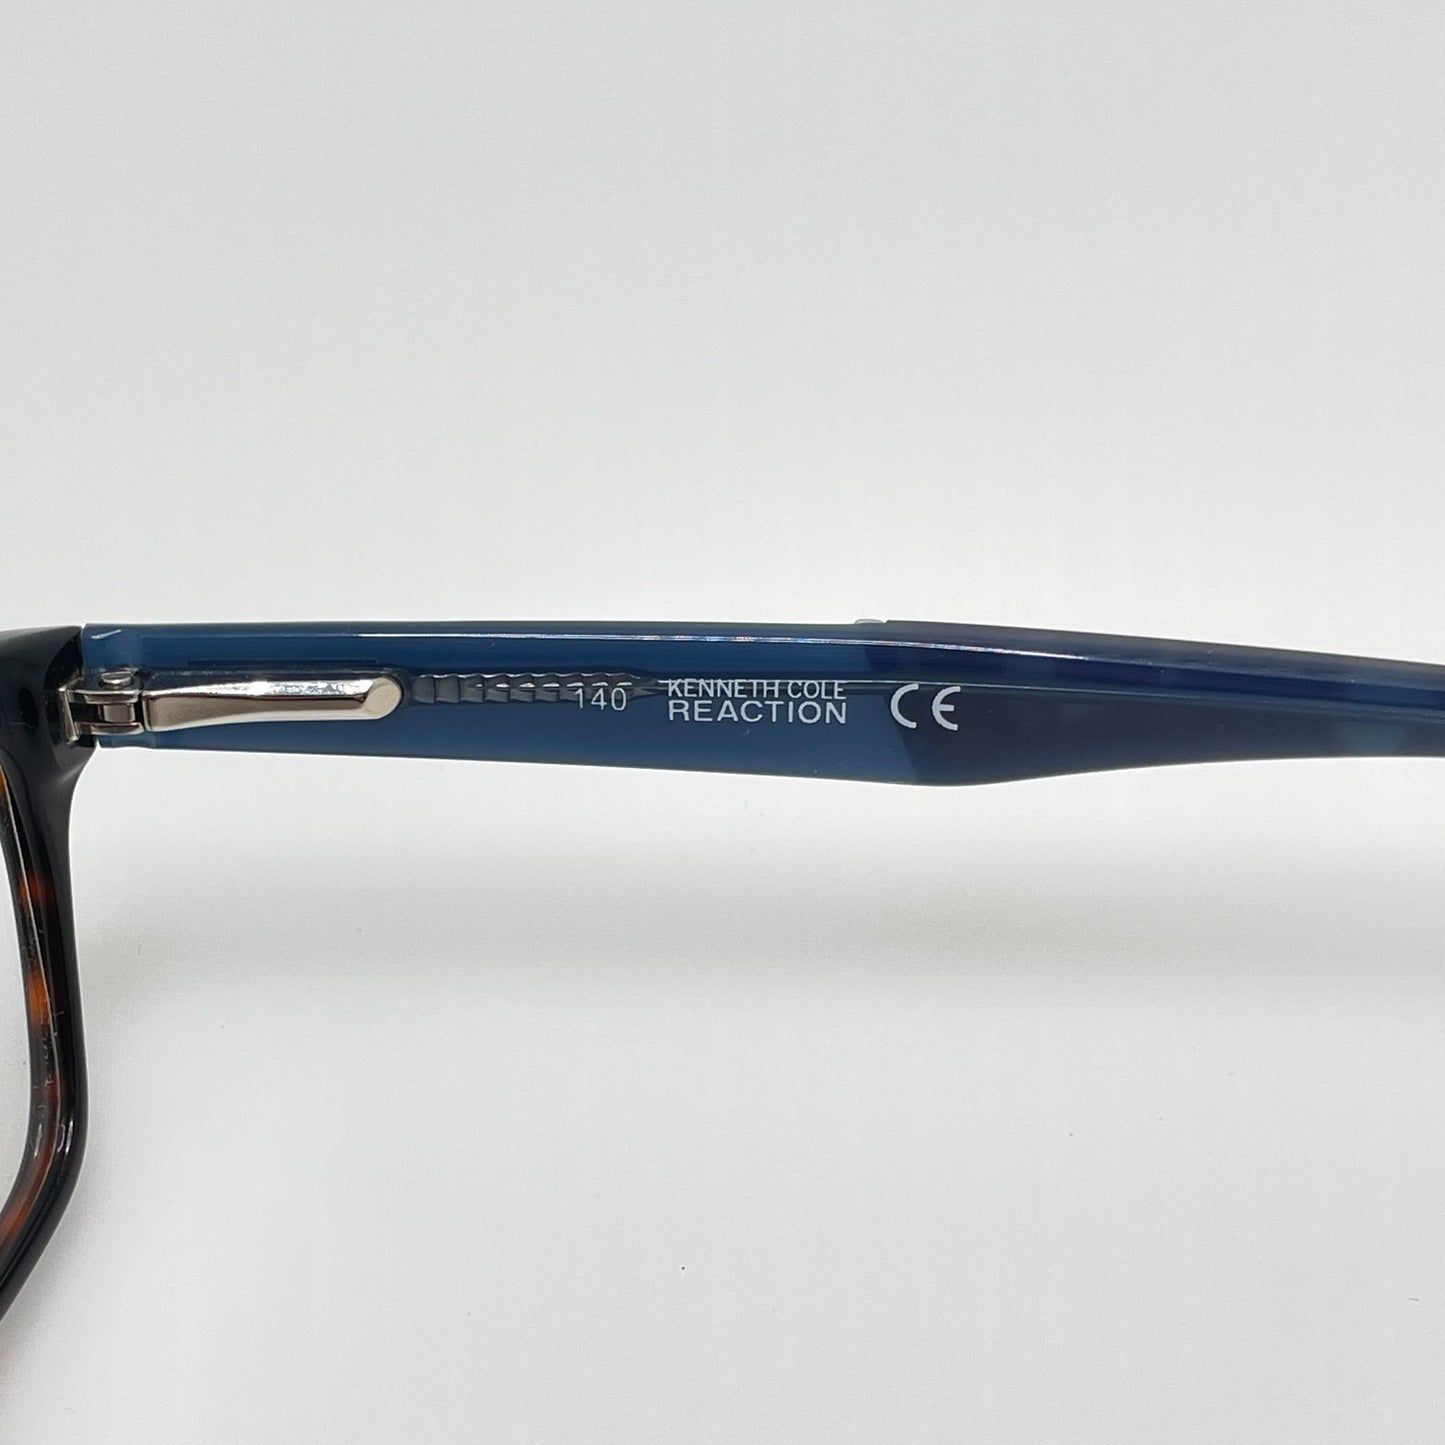 Kenneth Cole Eyeglasses Eye Glasses Frames KC756 052 54-16-140